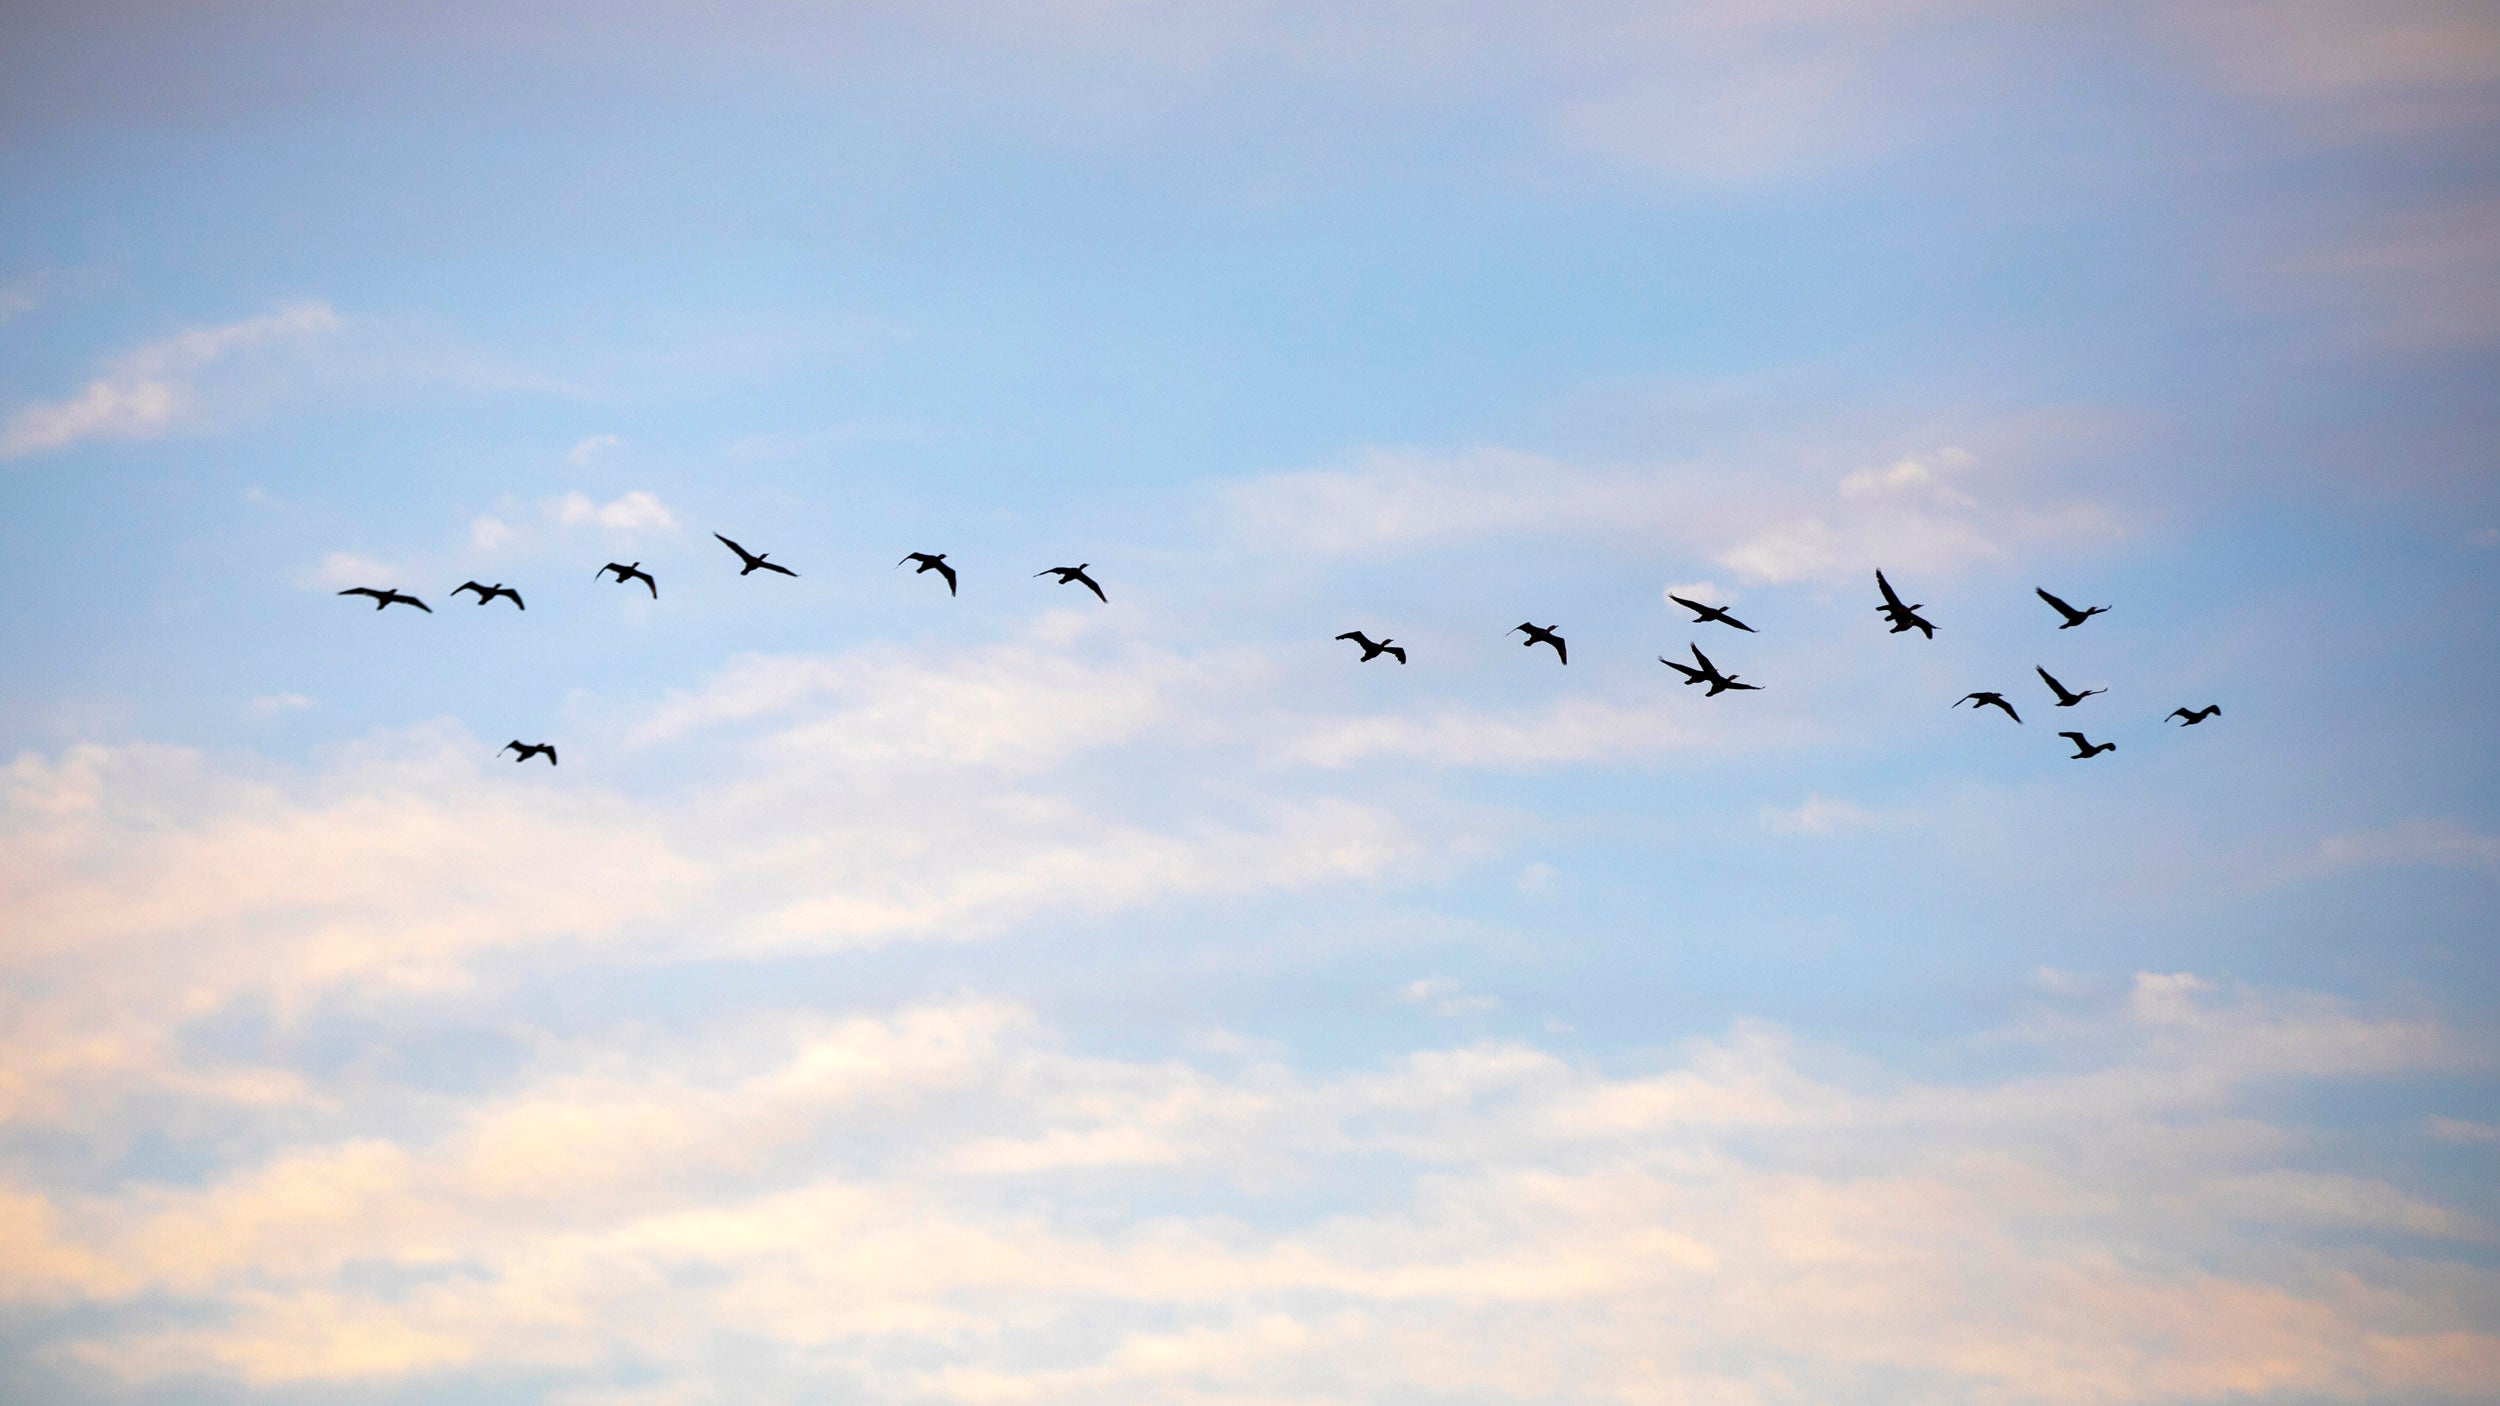 Cormorants fly across the morning sky.